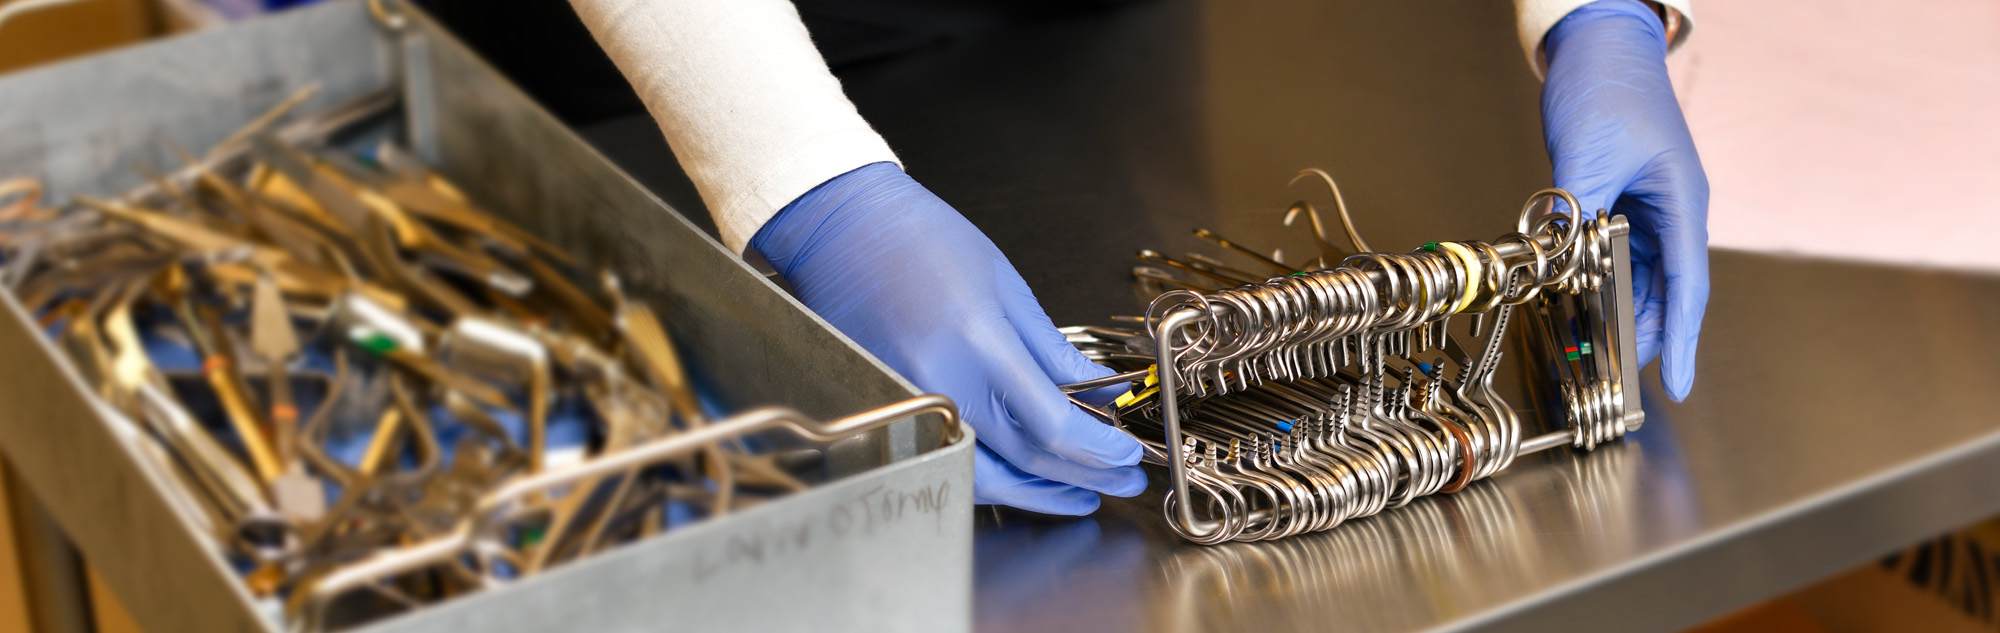 Technician organizes surgical instruments.